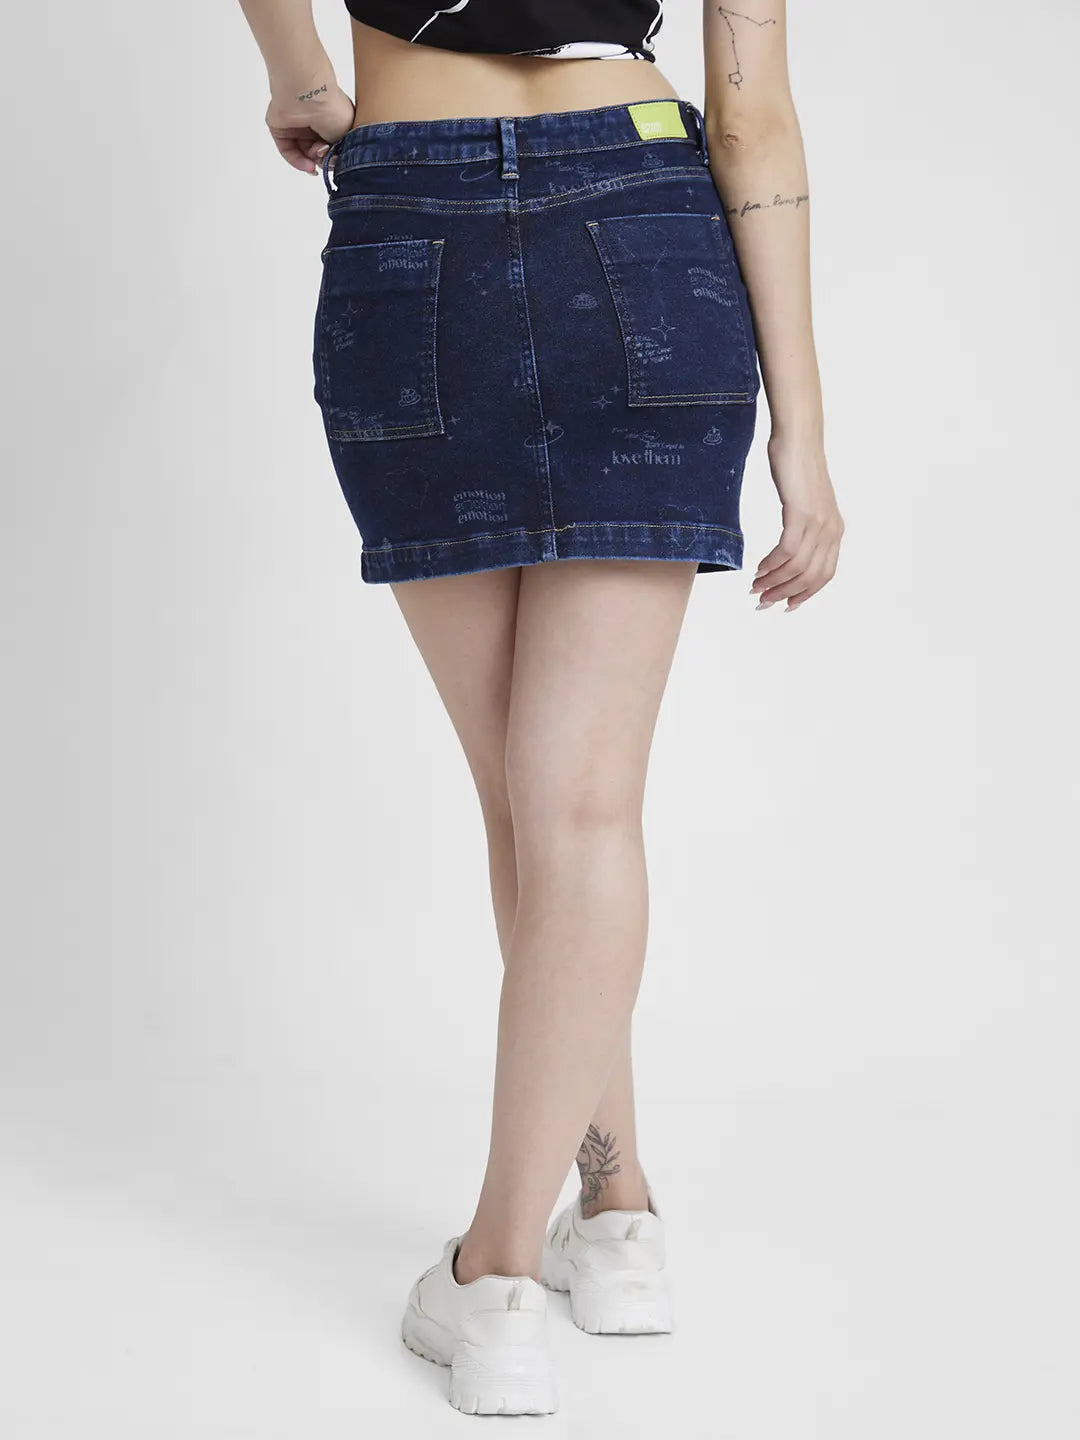 Buy SweatyRocks Women's Casual Long Denim Skirt High Rise A Line Raw Hem Jean  Skirts, Plain Blue, L at Amazon.in